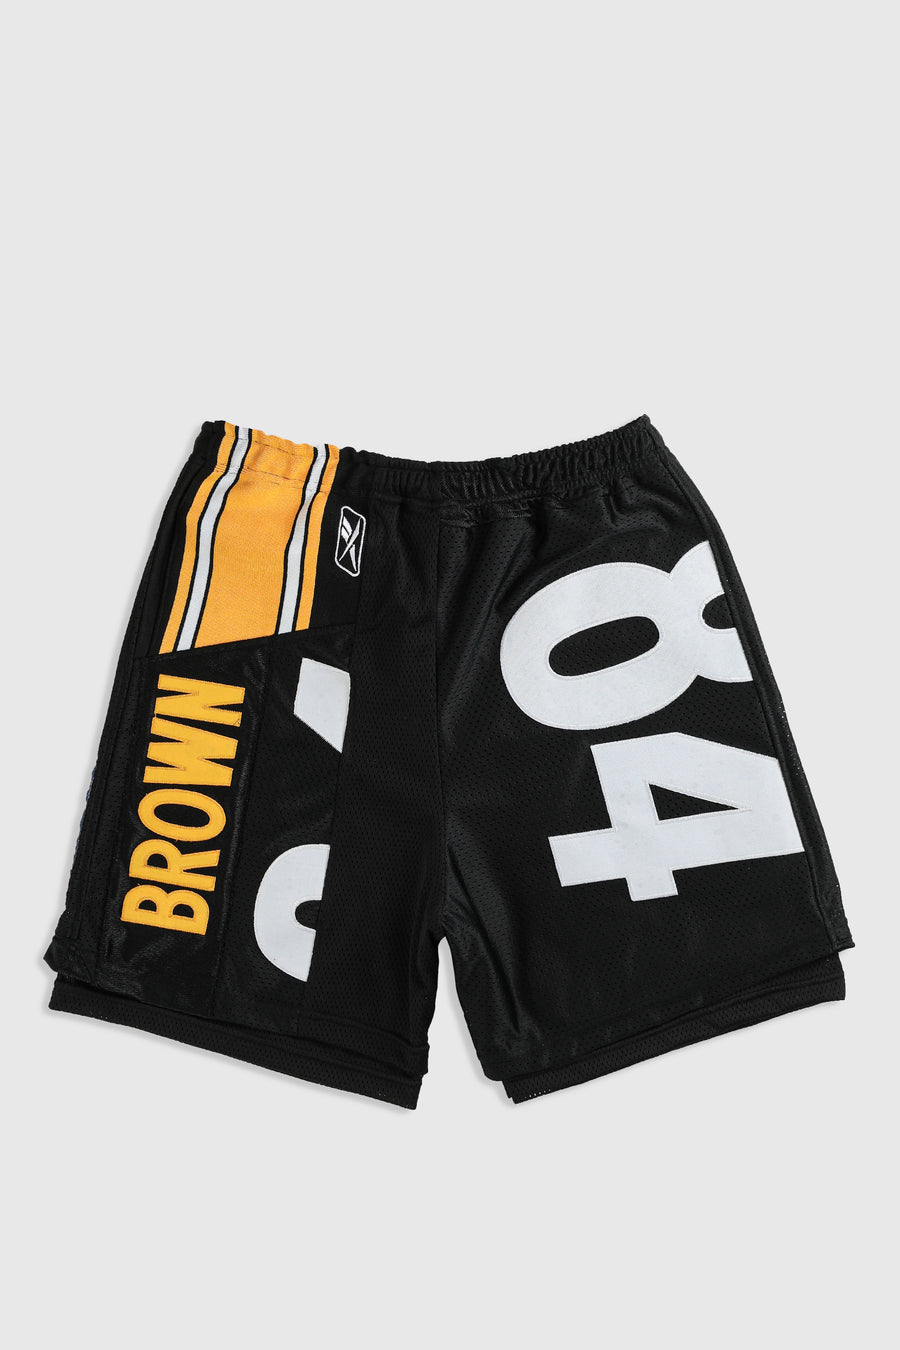 Unisex Rework Steelers NFL Jersey Shorts - L